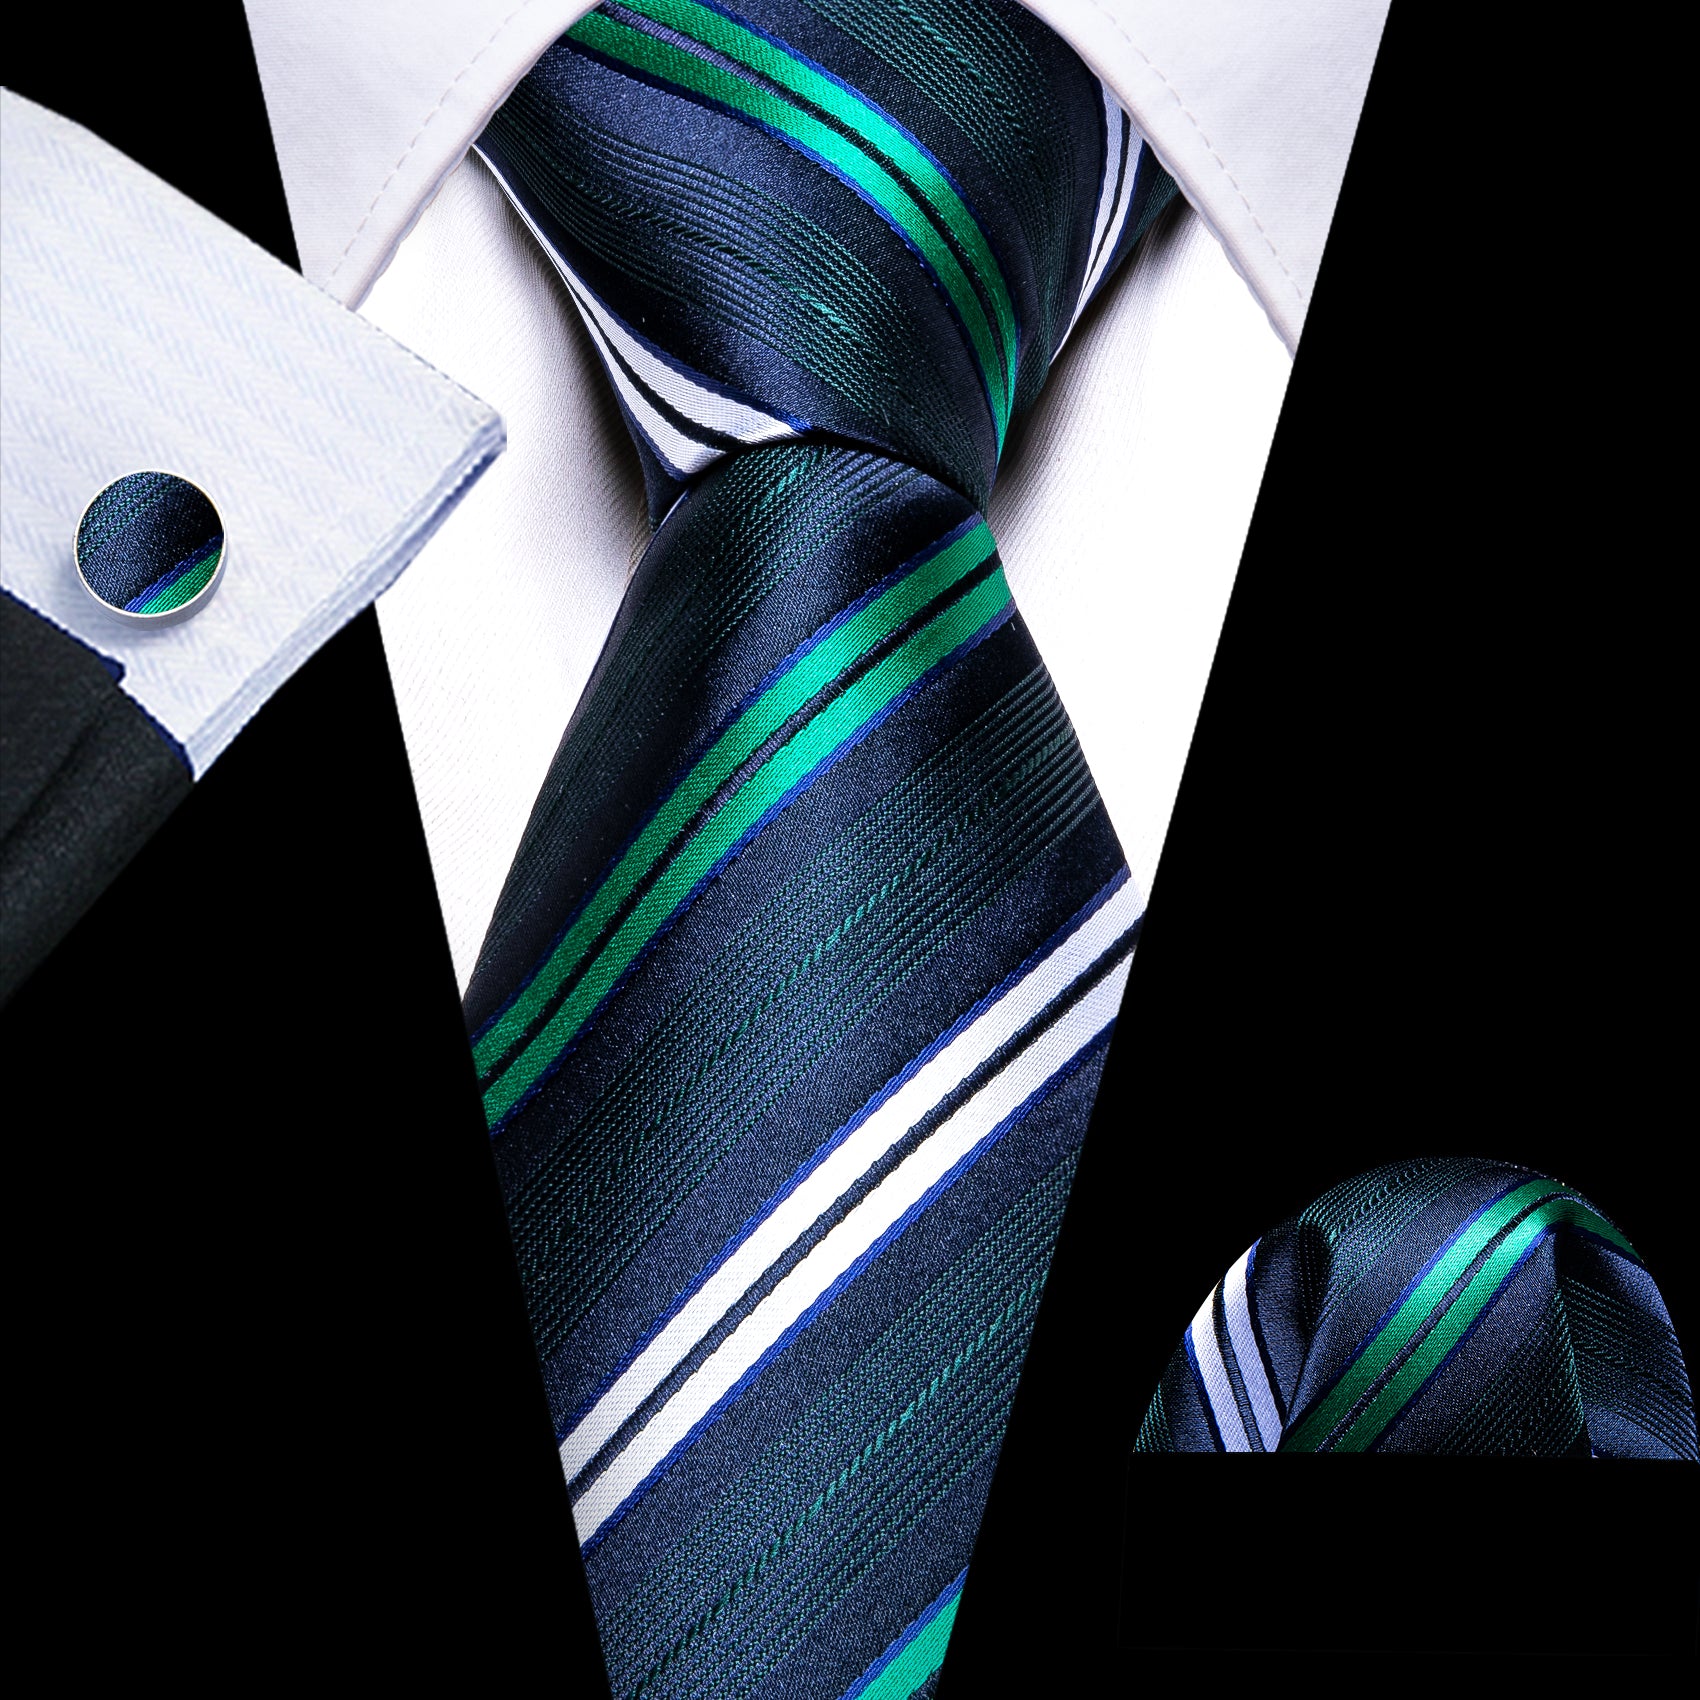 Deep Blue Green Striped Silk Tie Pocket Square Cufflinks Set